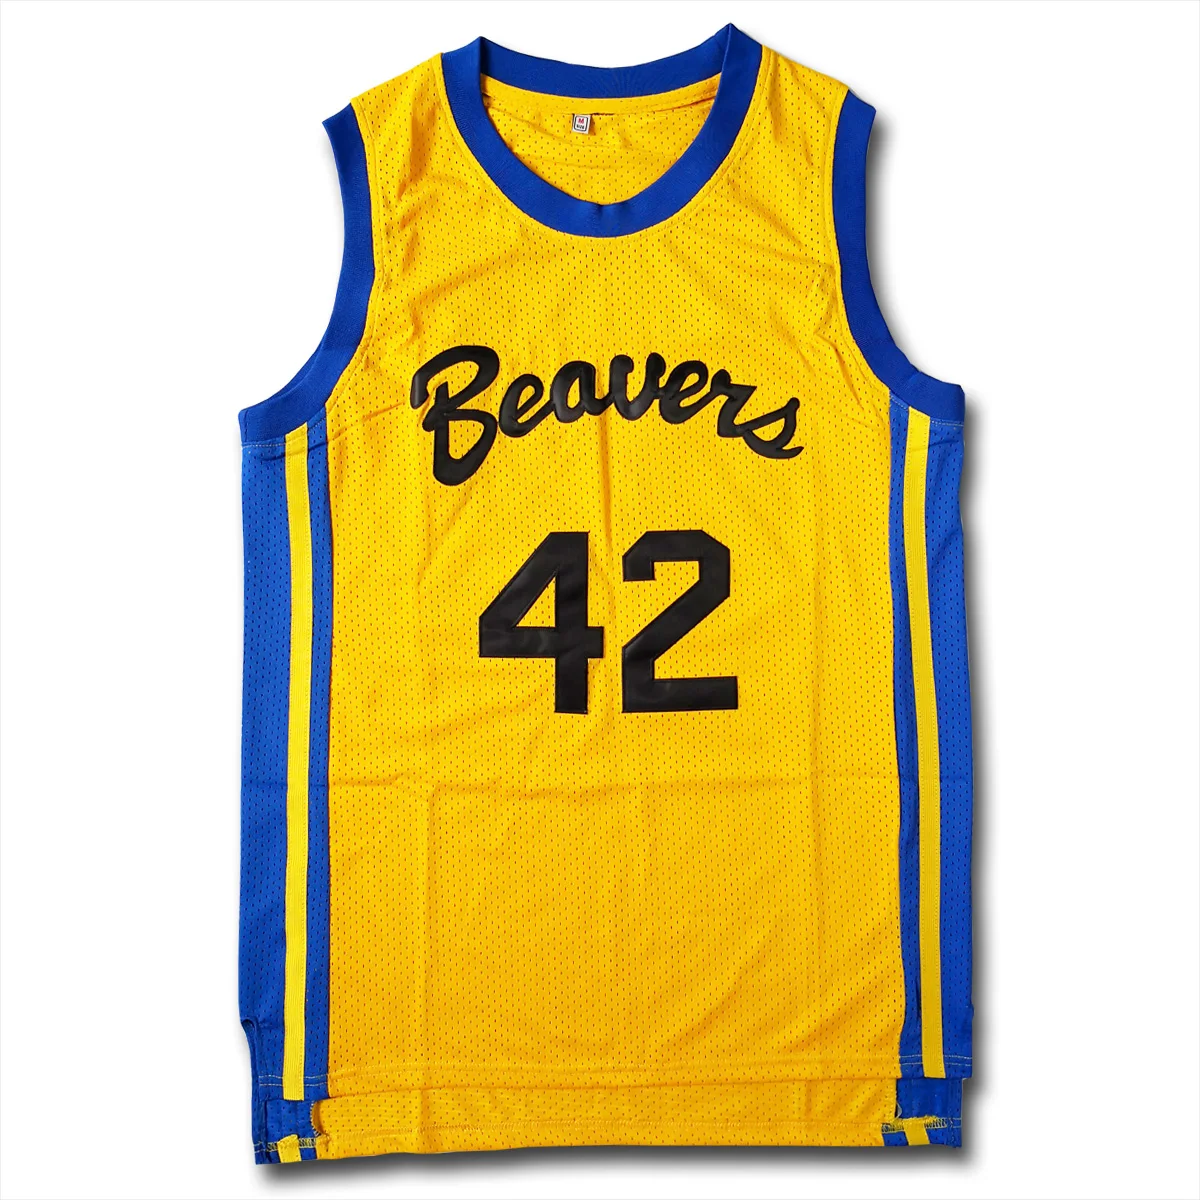 Men's Teen Wolf #42 Howard Moive Beacon Beavers Basketball Jersey Yellow American Film Outdoor Sport Shirt